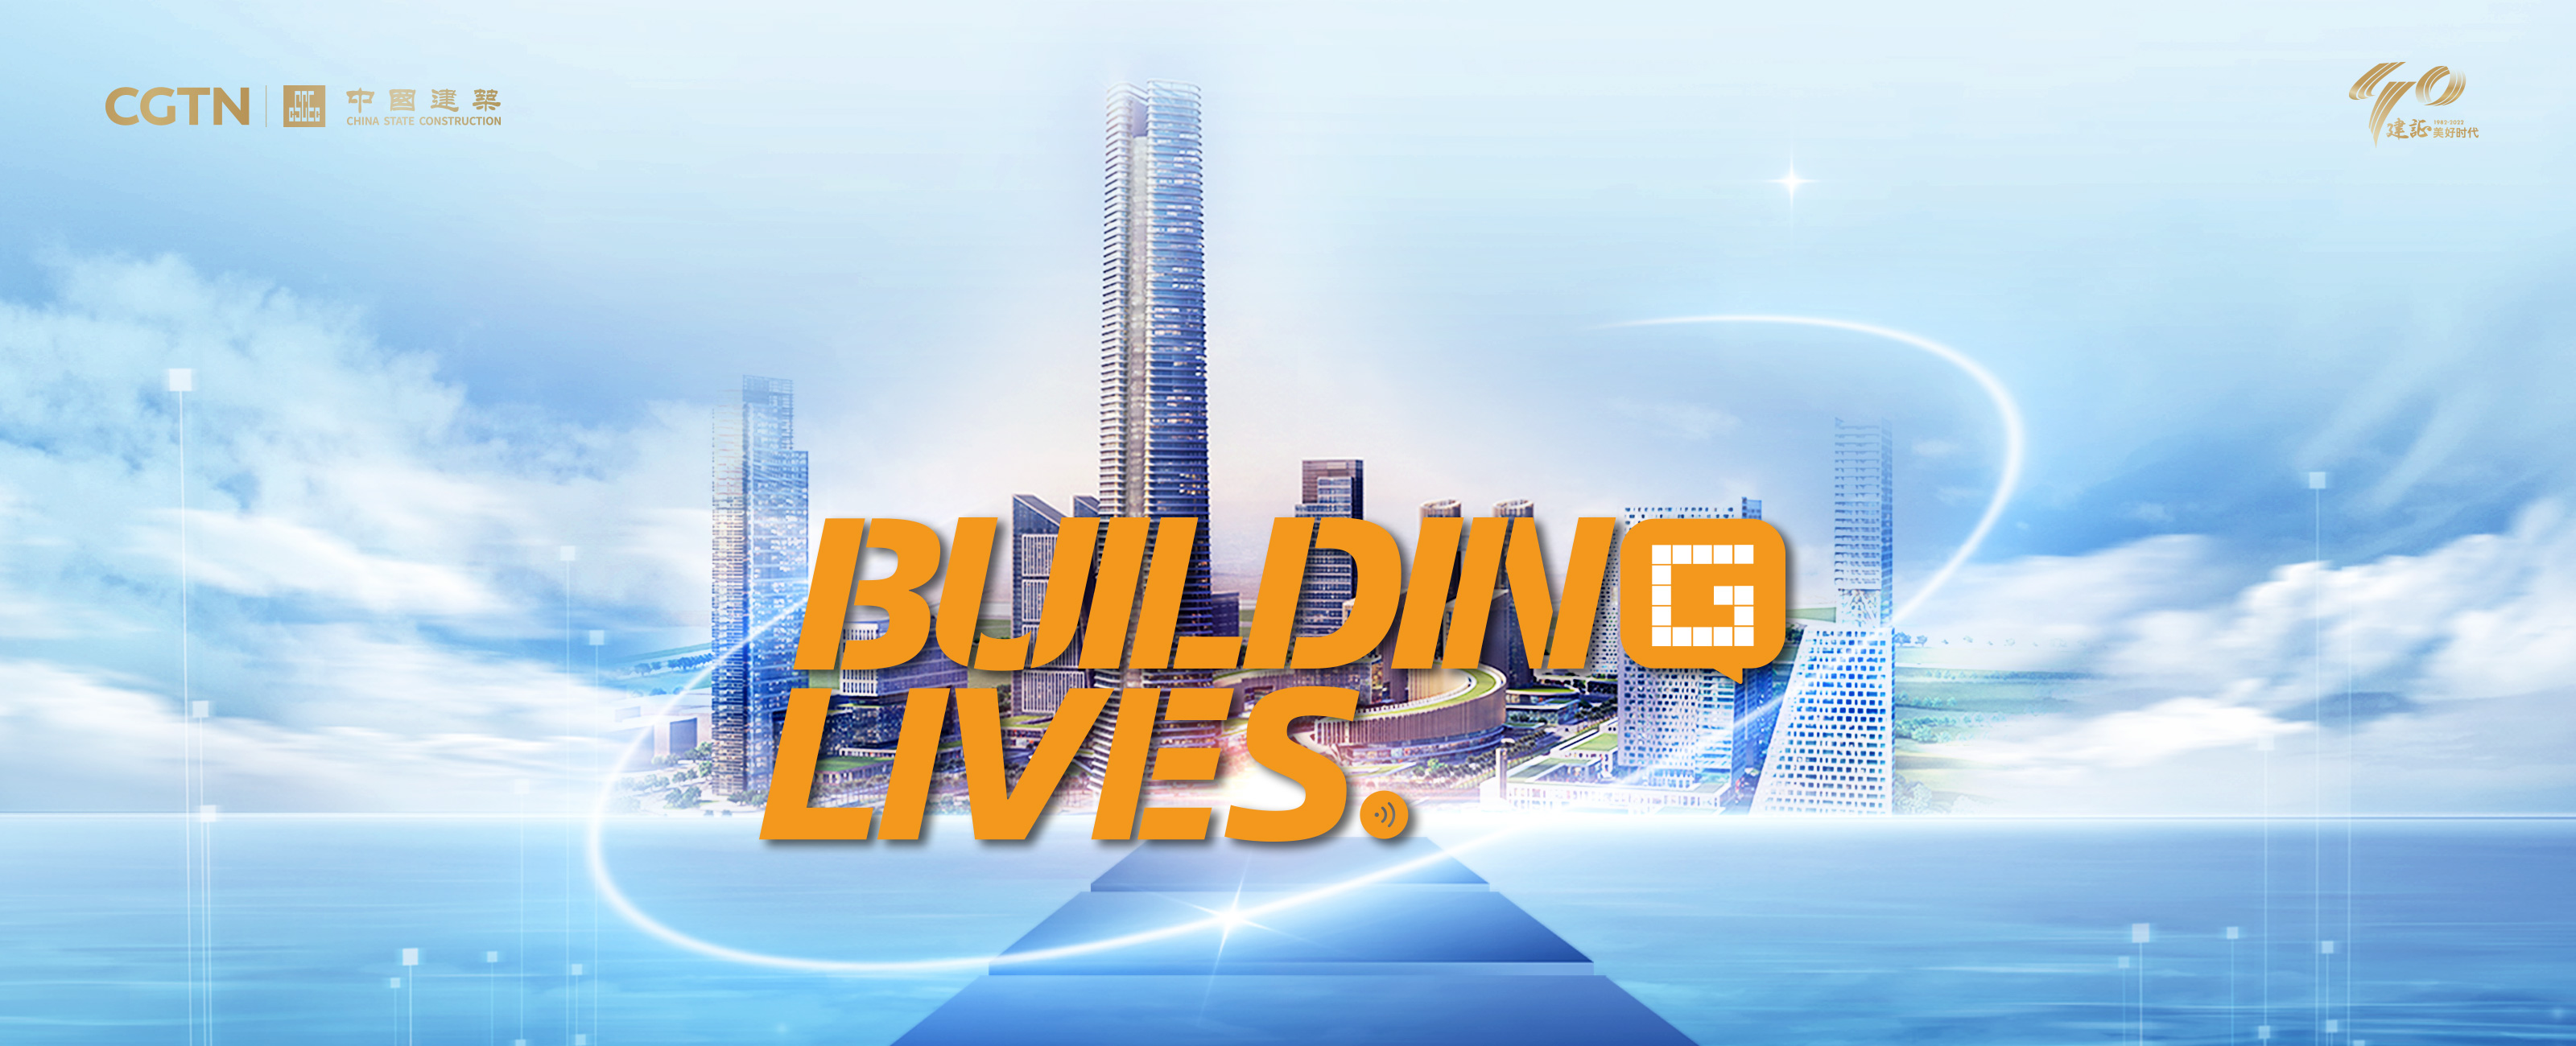 BUILDING LIVES